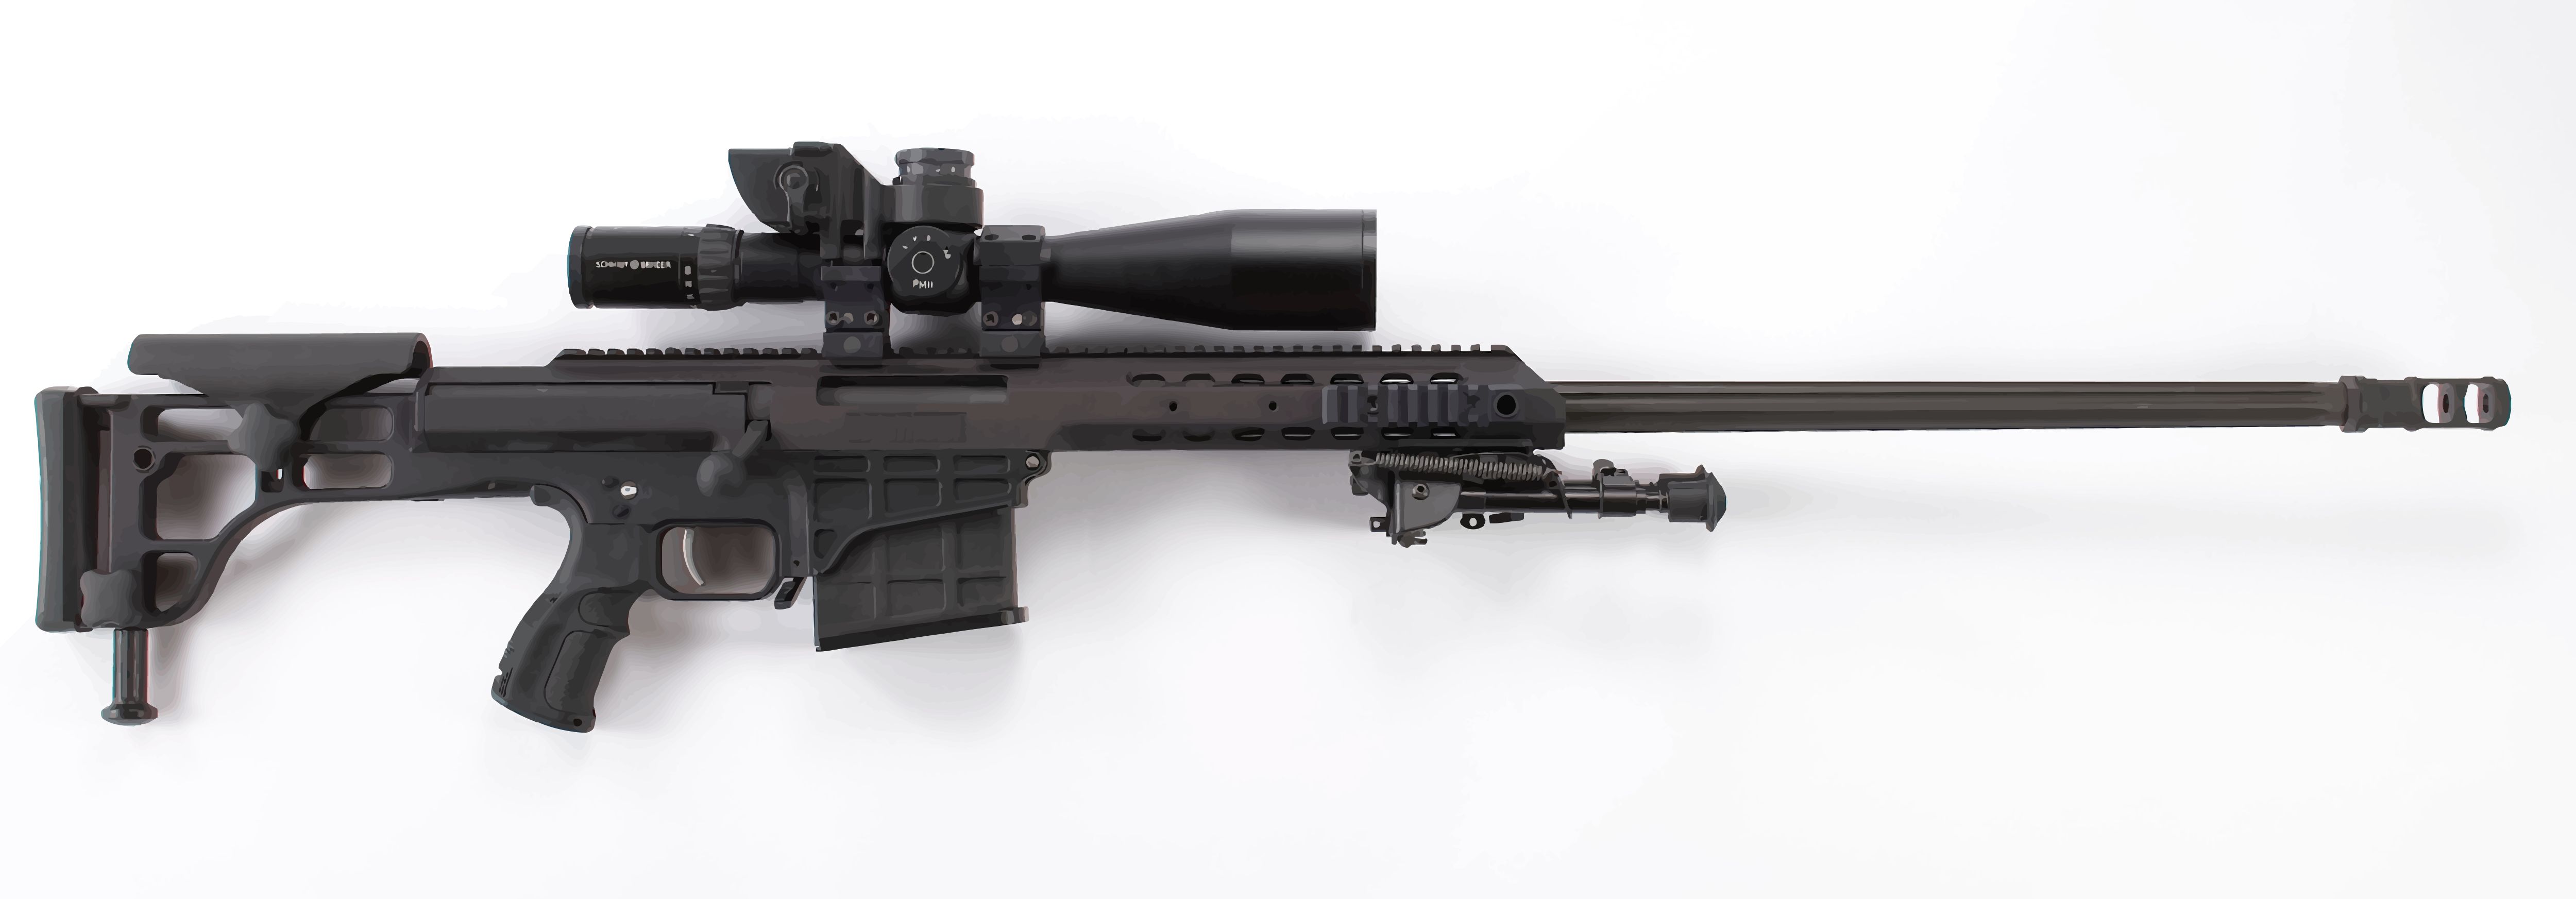 General 5000x1745 gun sniper rifle weapon rifles Barrett M98 simple background military